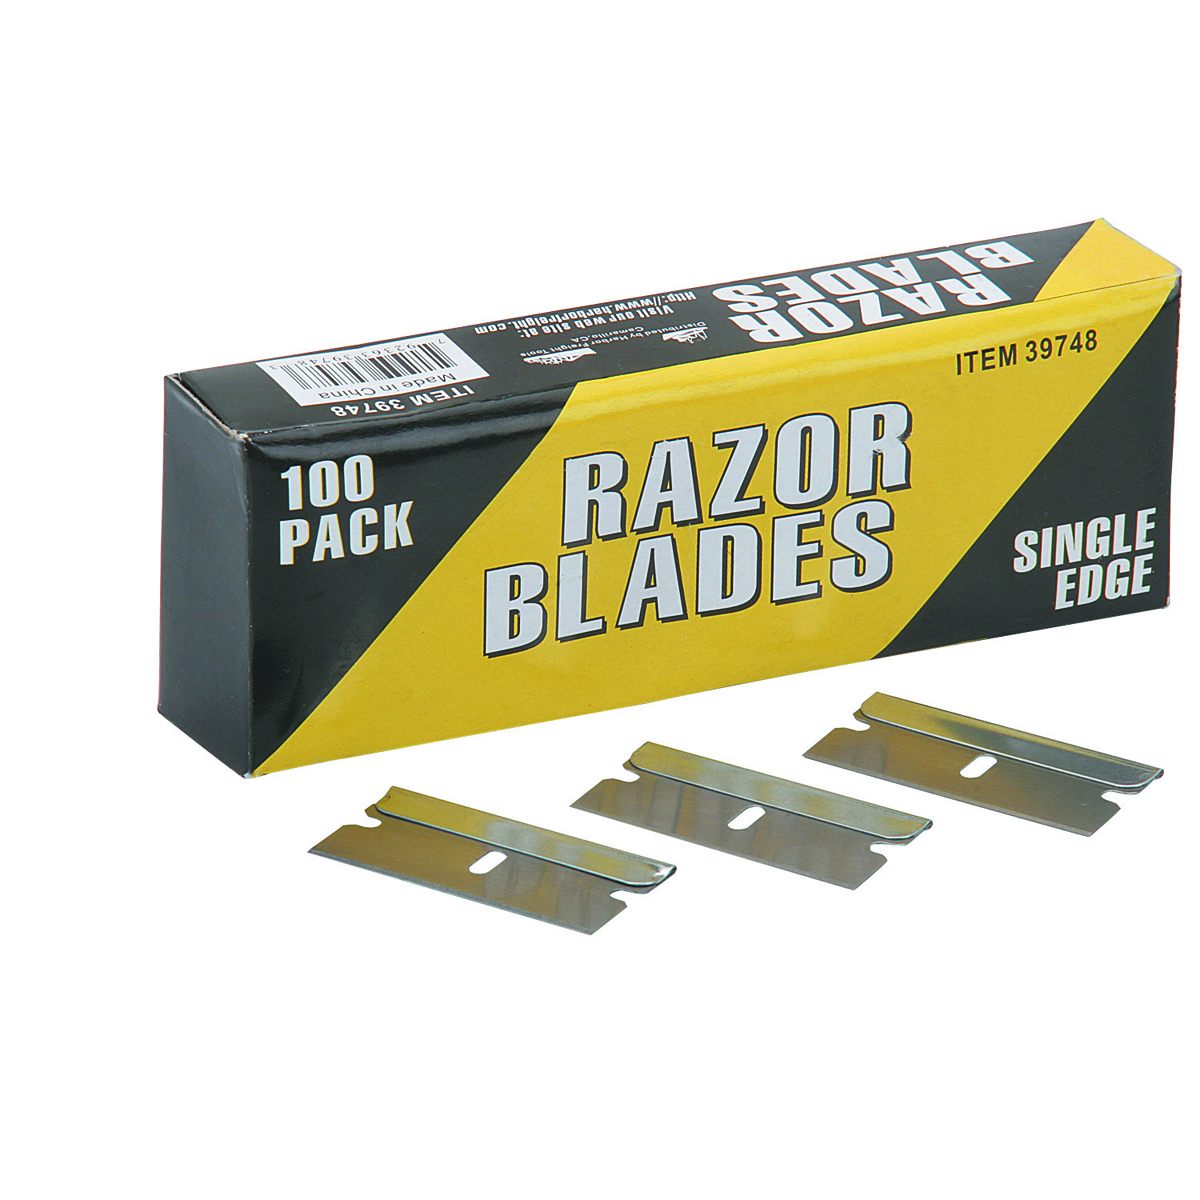 Razor Blades 100 Pk. - Item 39748 / 67123